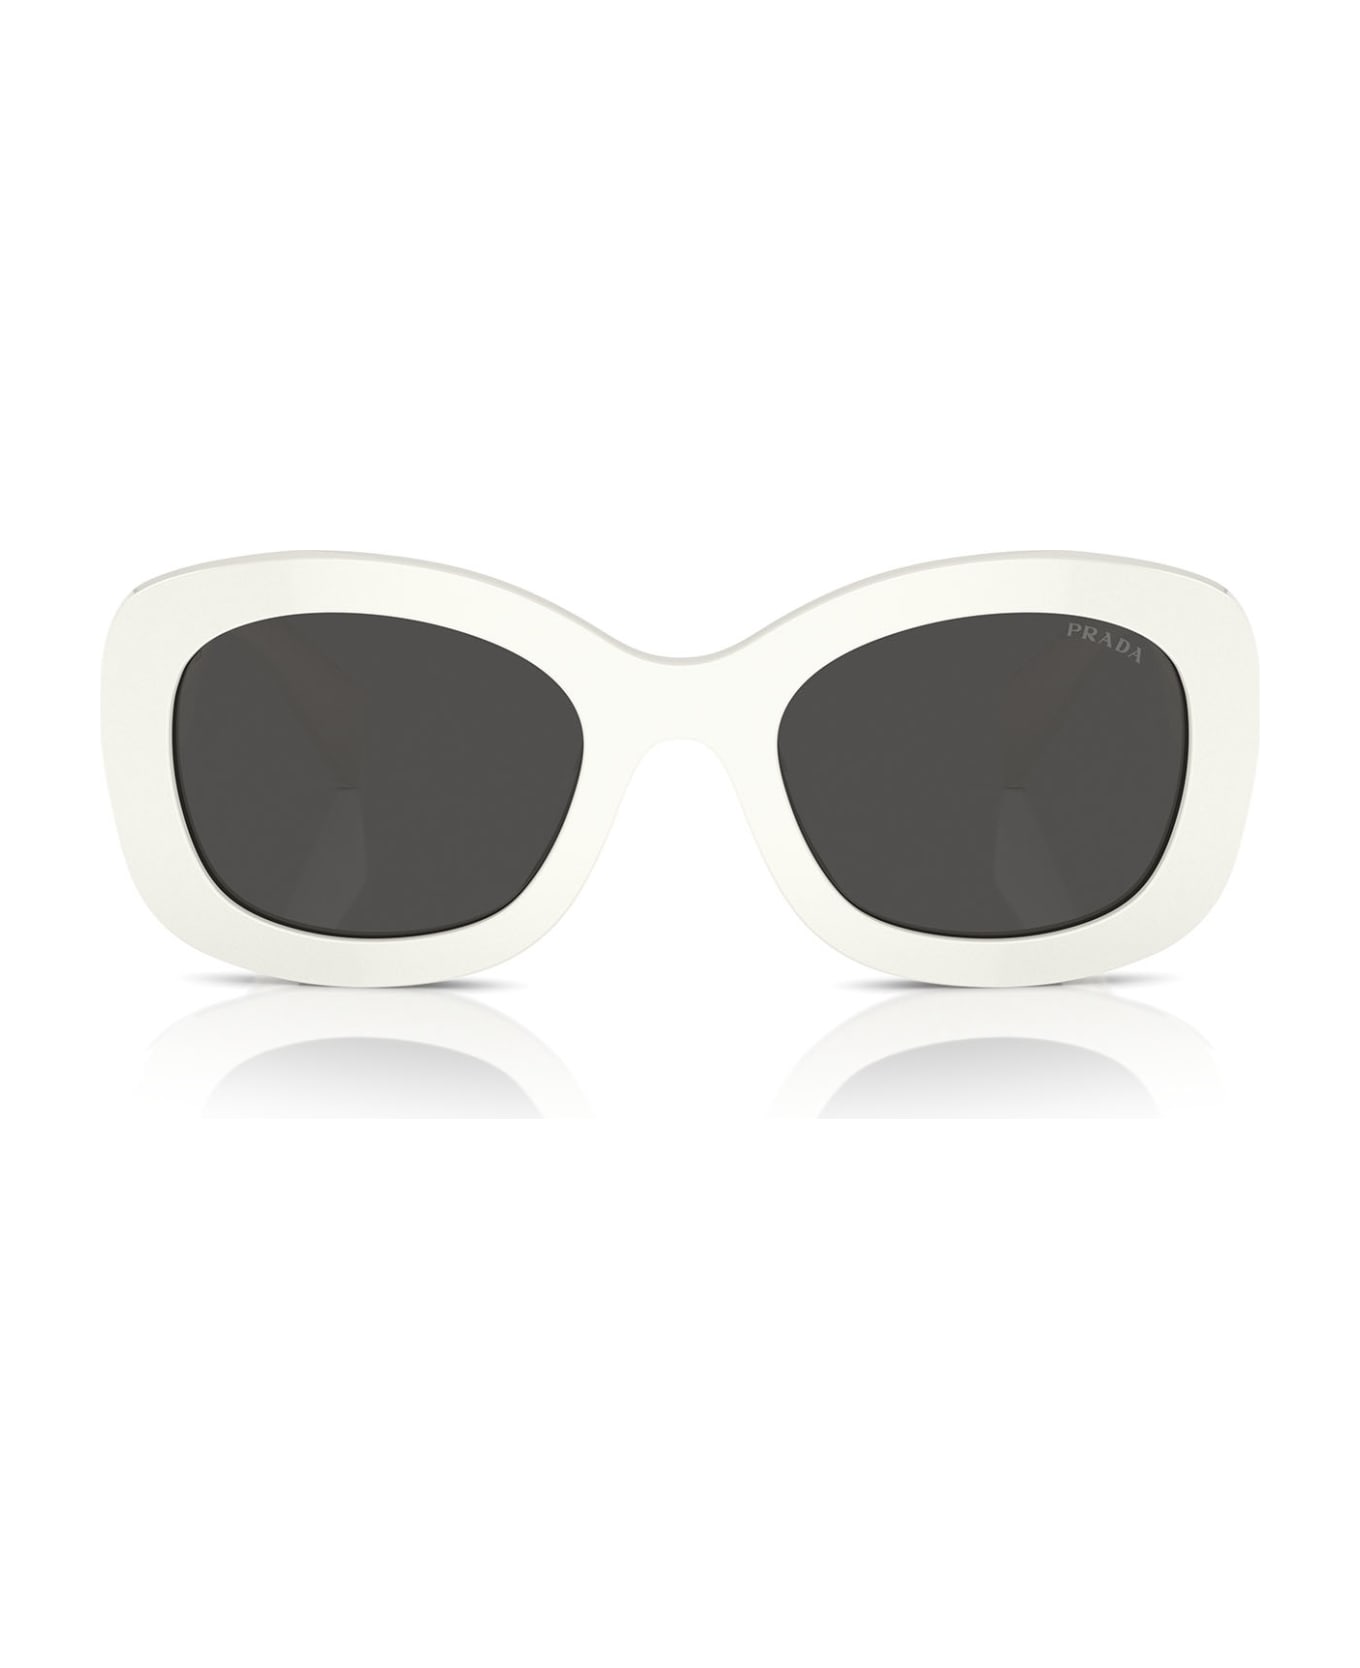 Prada Eyewear Pr A13s Talc Sunglasses - Talc サングラス